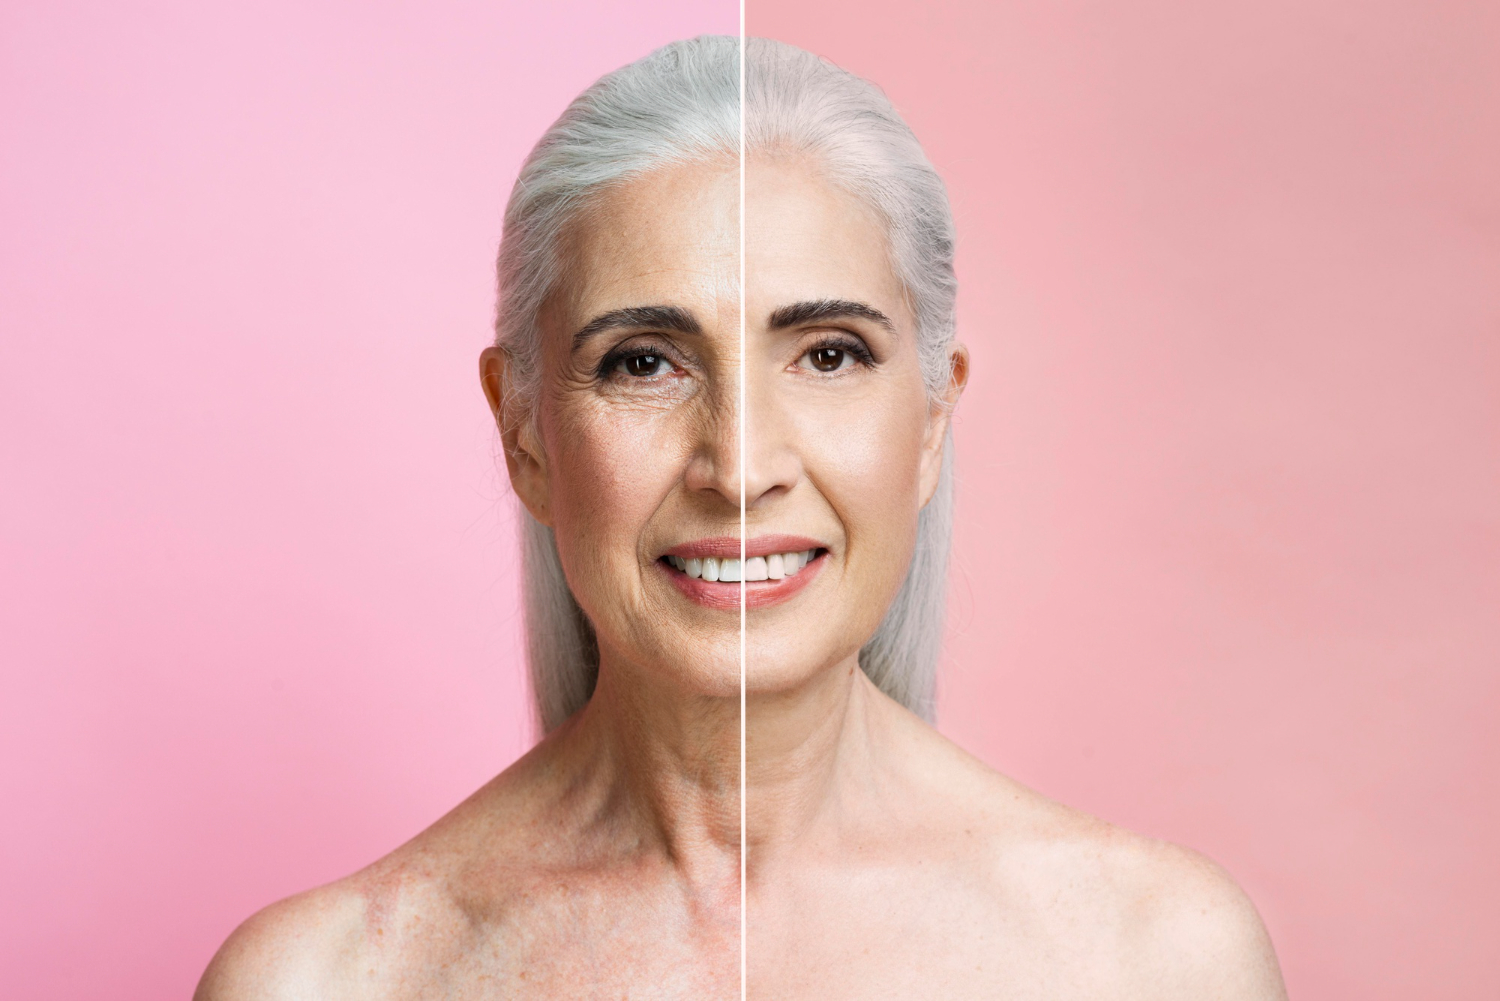 Beneficios de la mesoterapia facial con vitaminas - Palmamédica